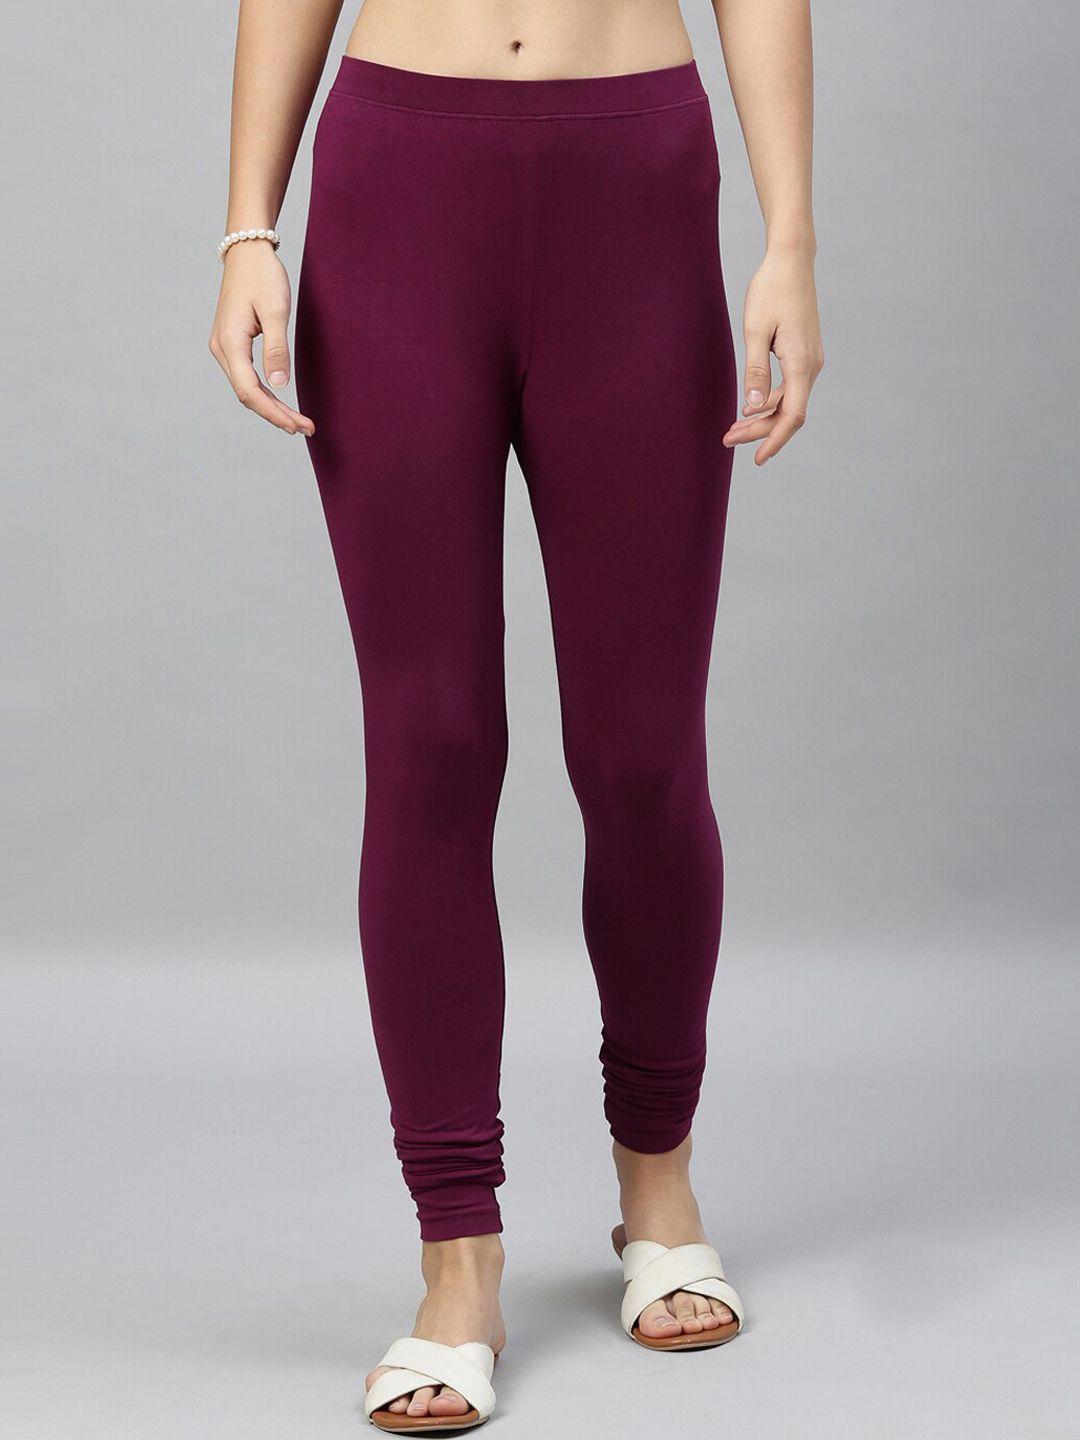 kryptic-women-purple-solid-churidar-length-leggings